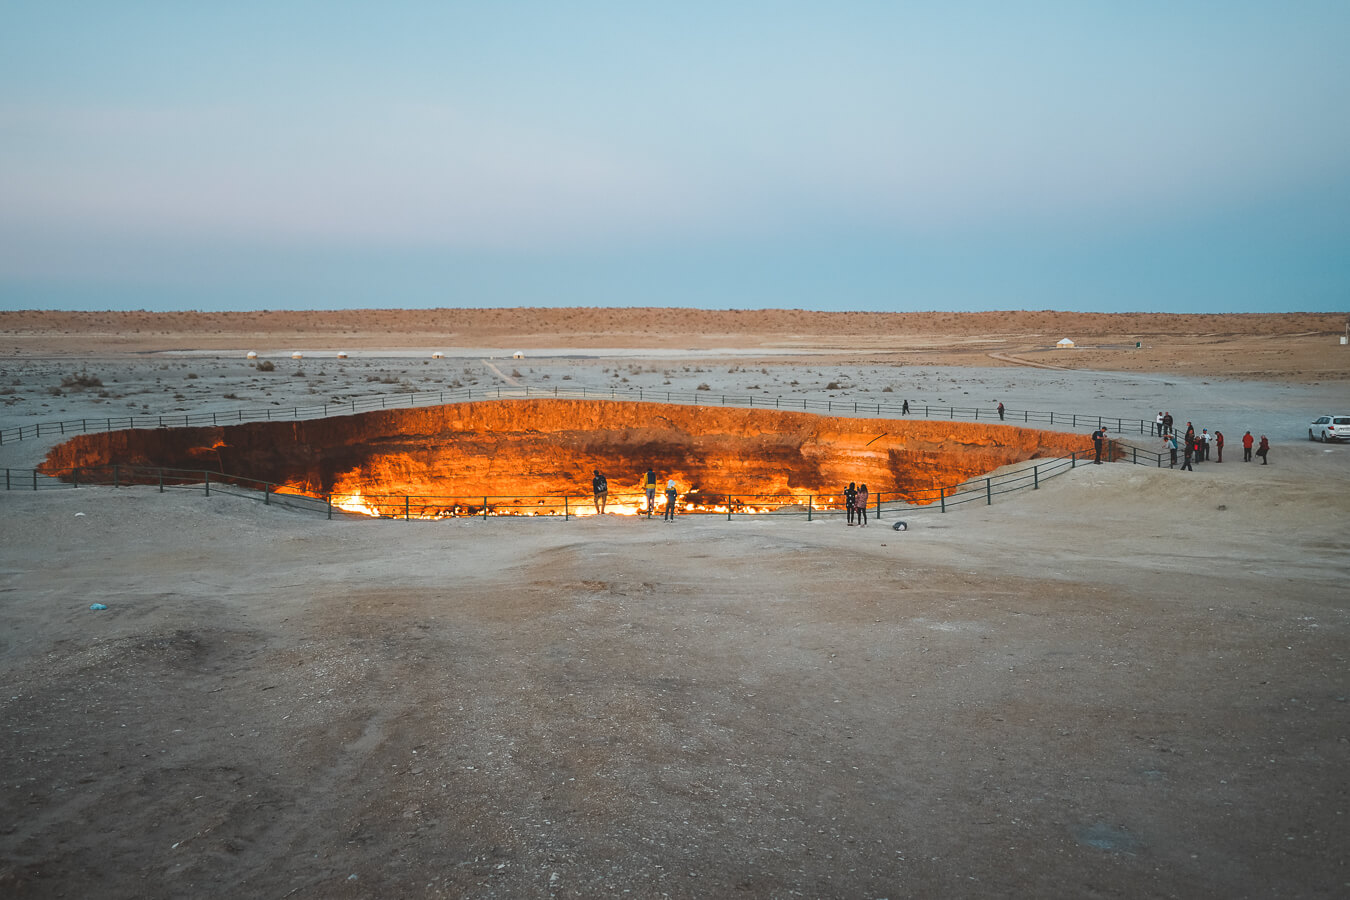 Darvaza in Turkmenistan